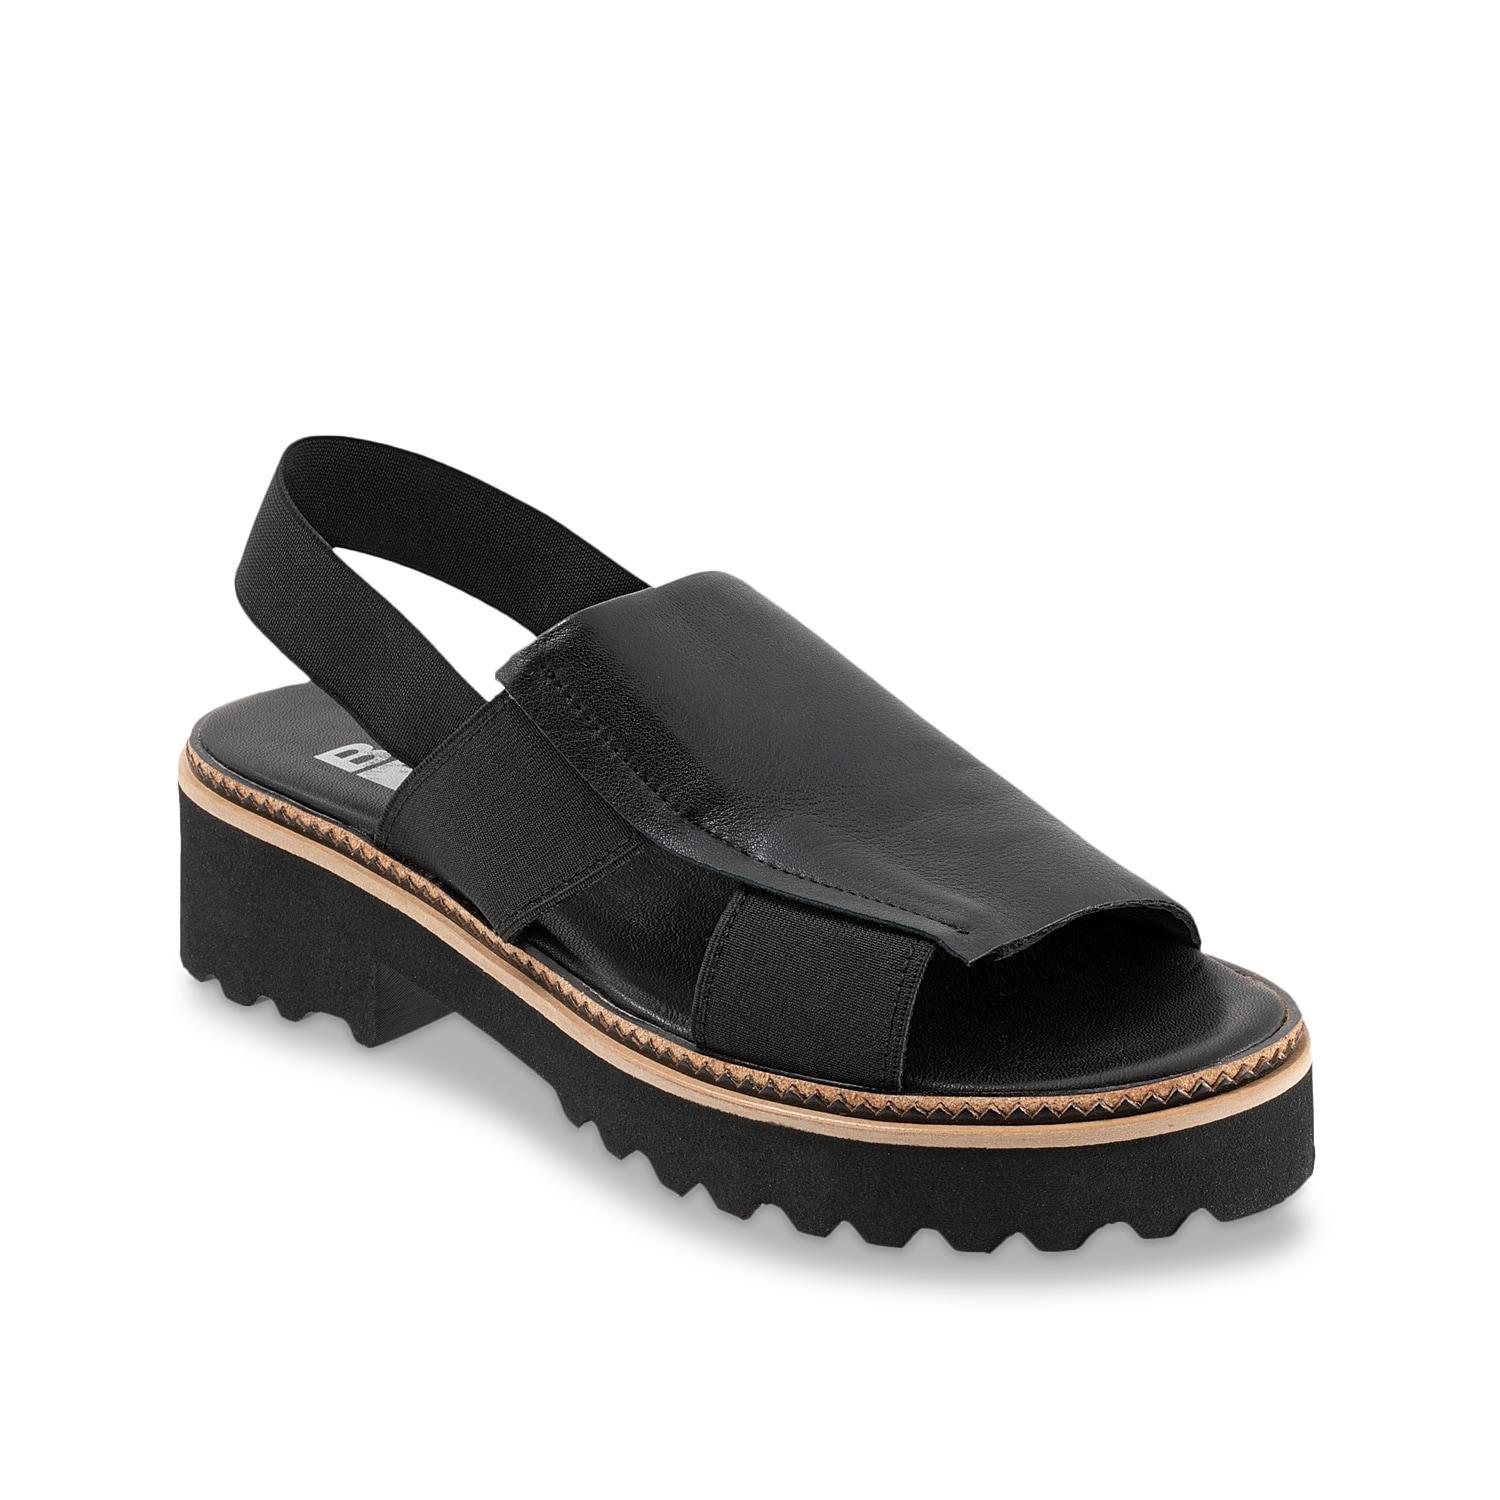 Bueno Amy Slingback Platform Sandal Product Image